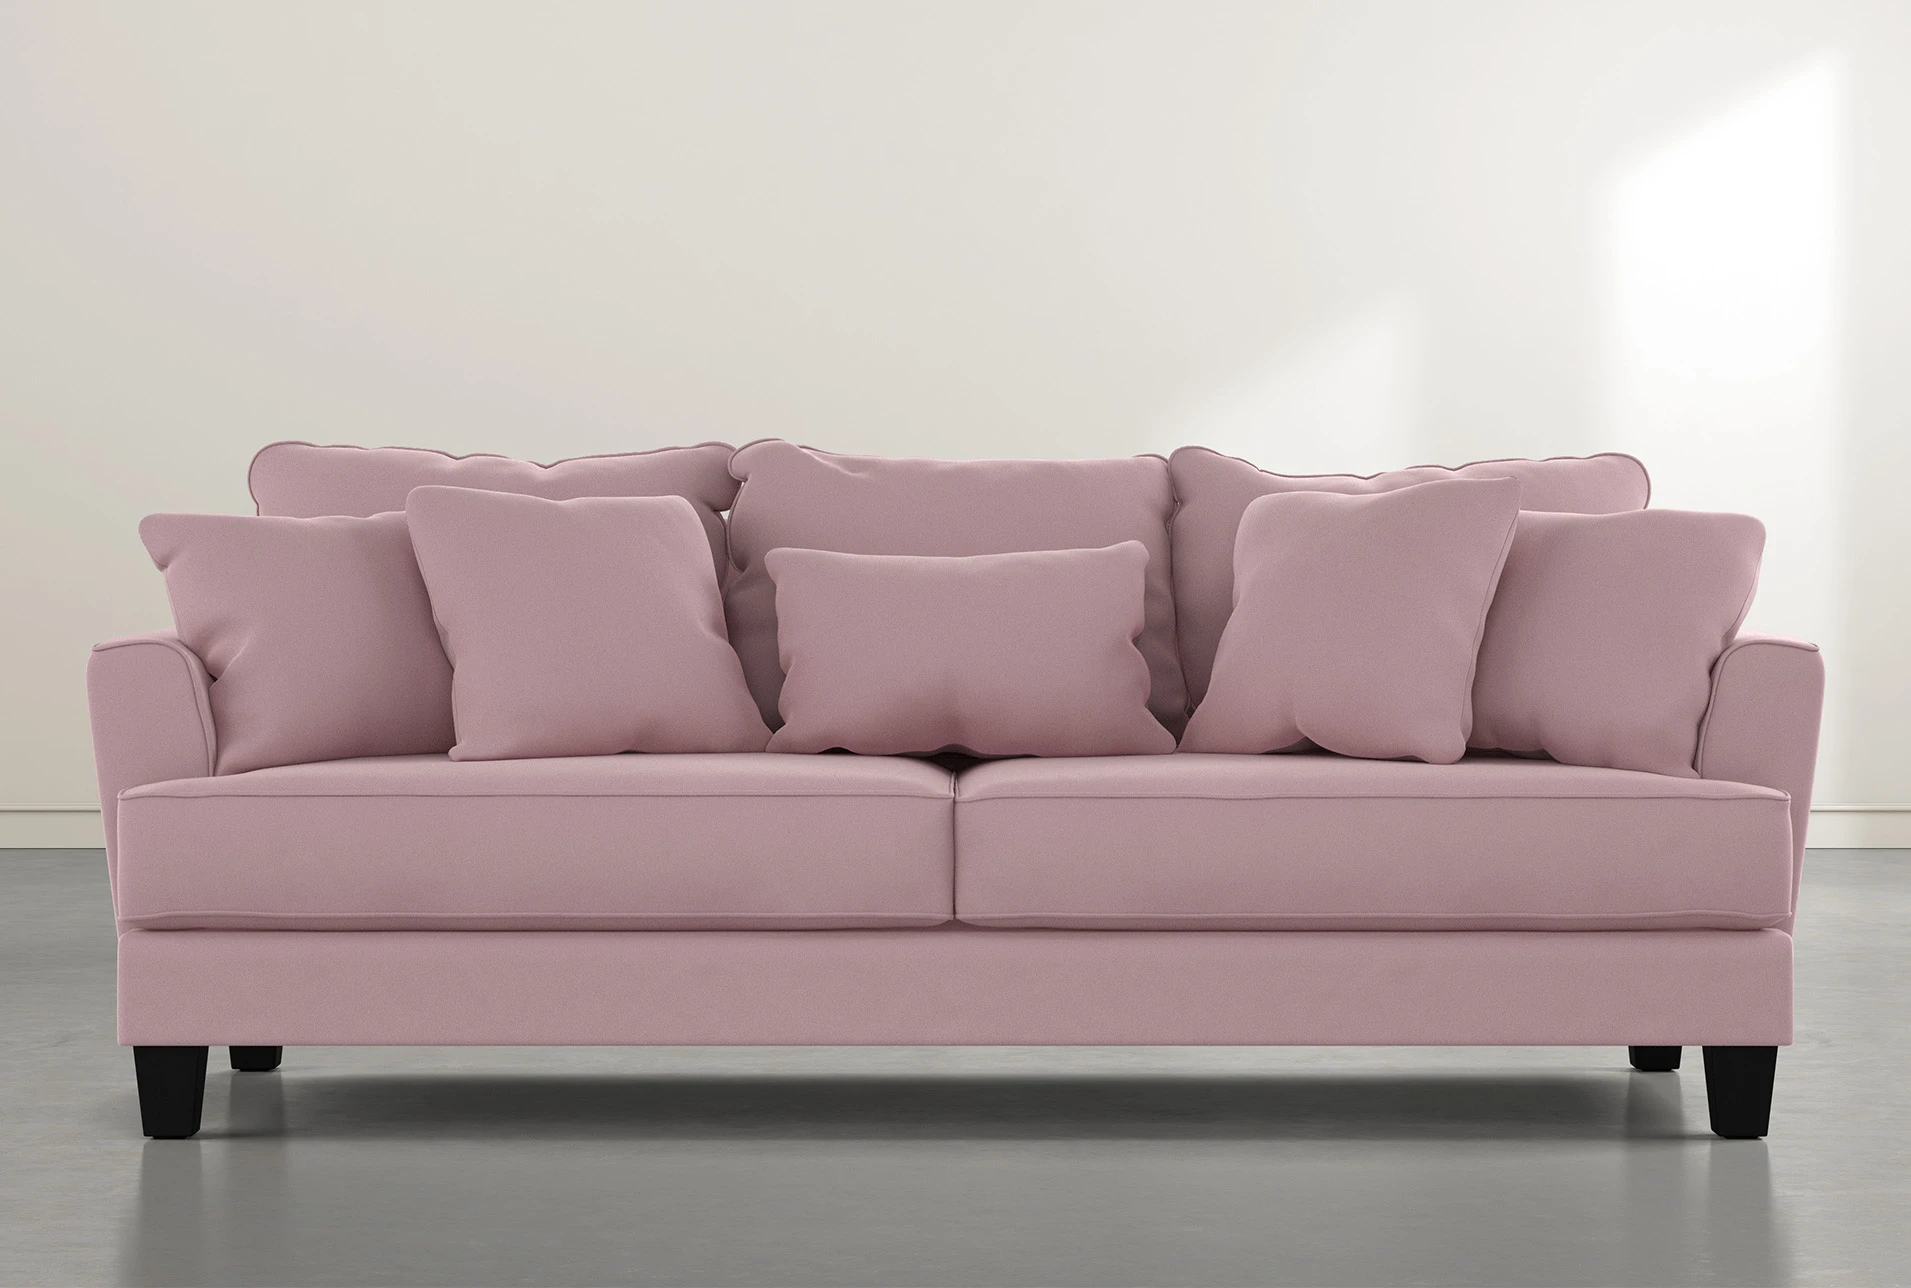 deep pink sofa bed